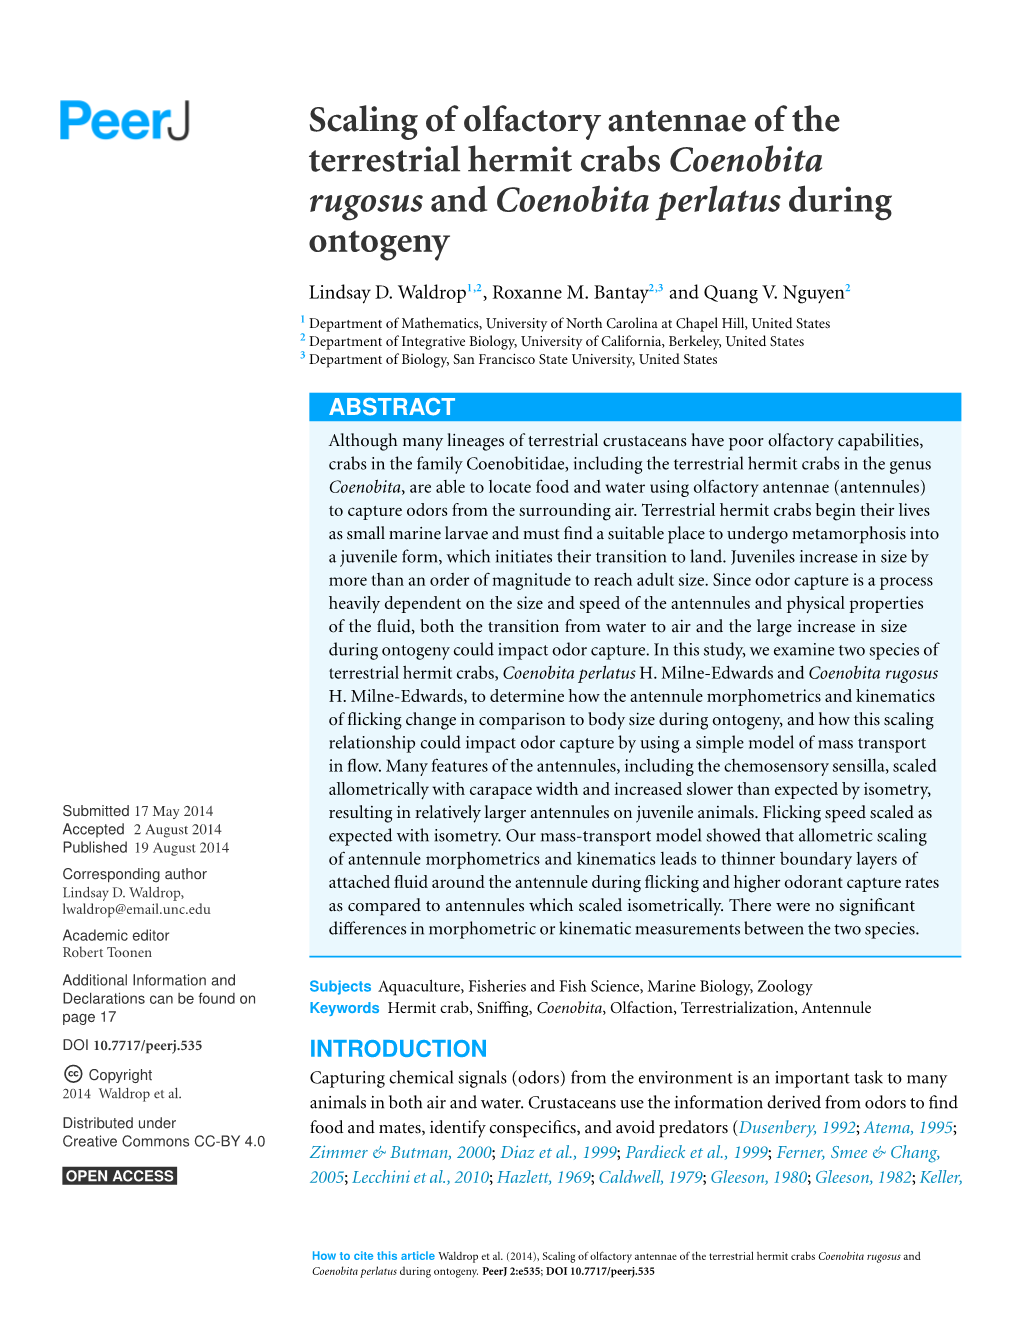 Scaling of Olfactory Antennae of the Terrestrial Hermit Crabs Coenobita Rugosus and Coenobita Perlatus During Ontogeny